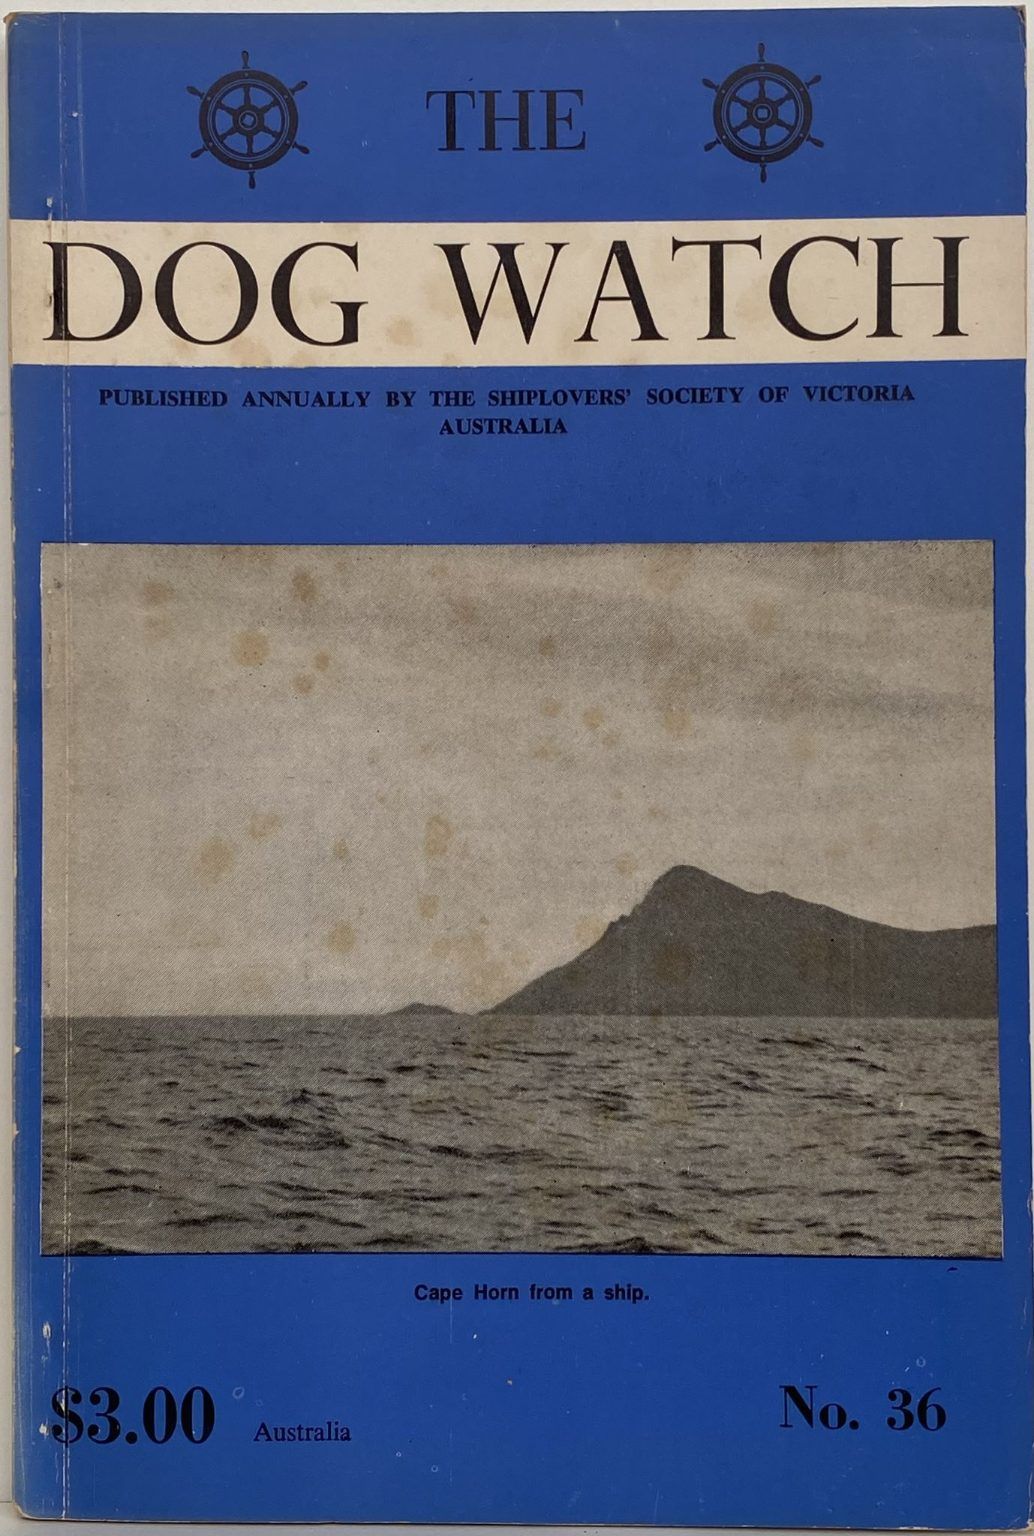 THE DOG WATCH: Shiplover's Society of Victoria Australia No. 36